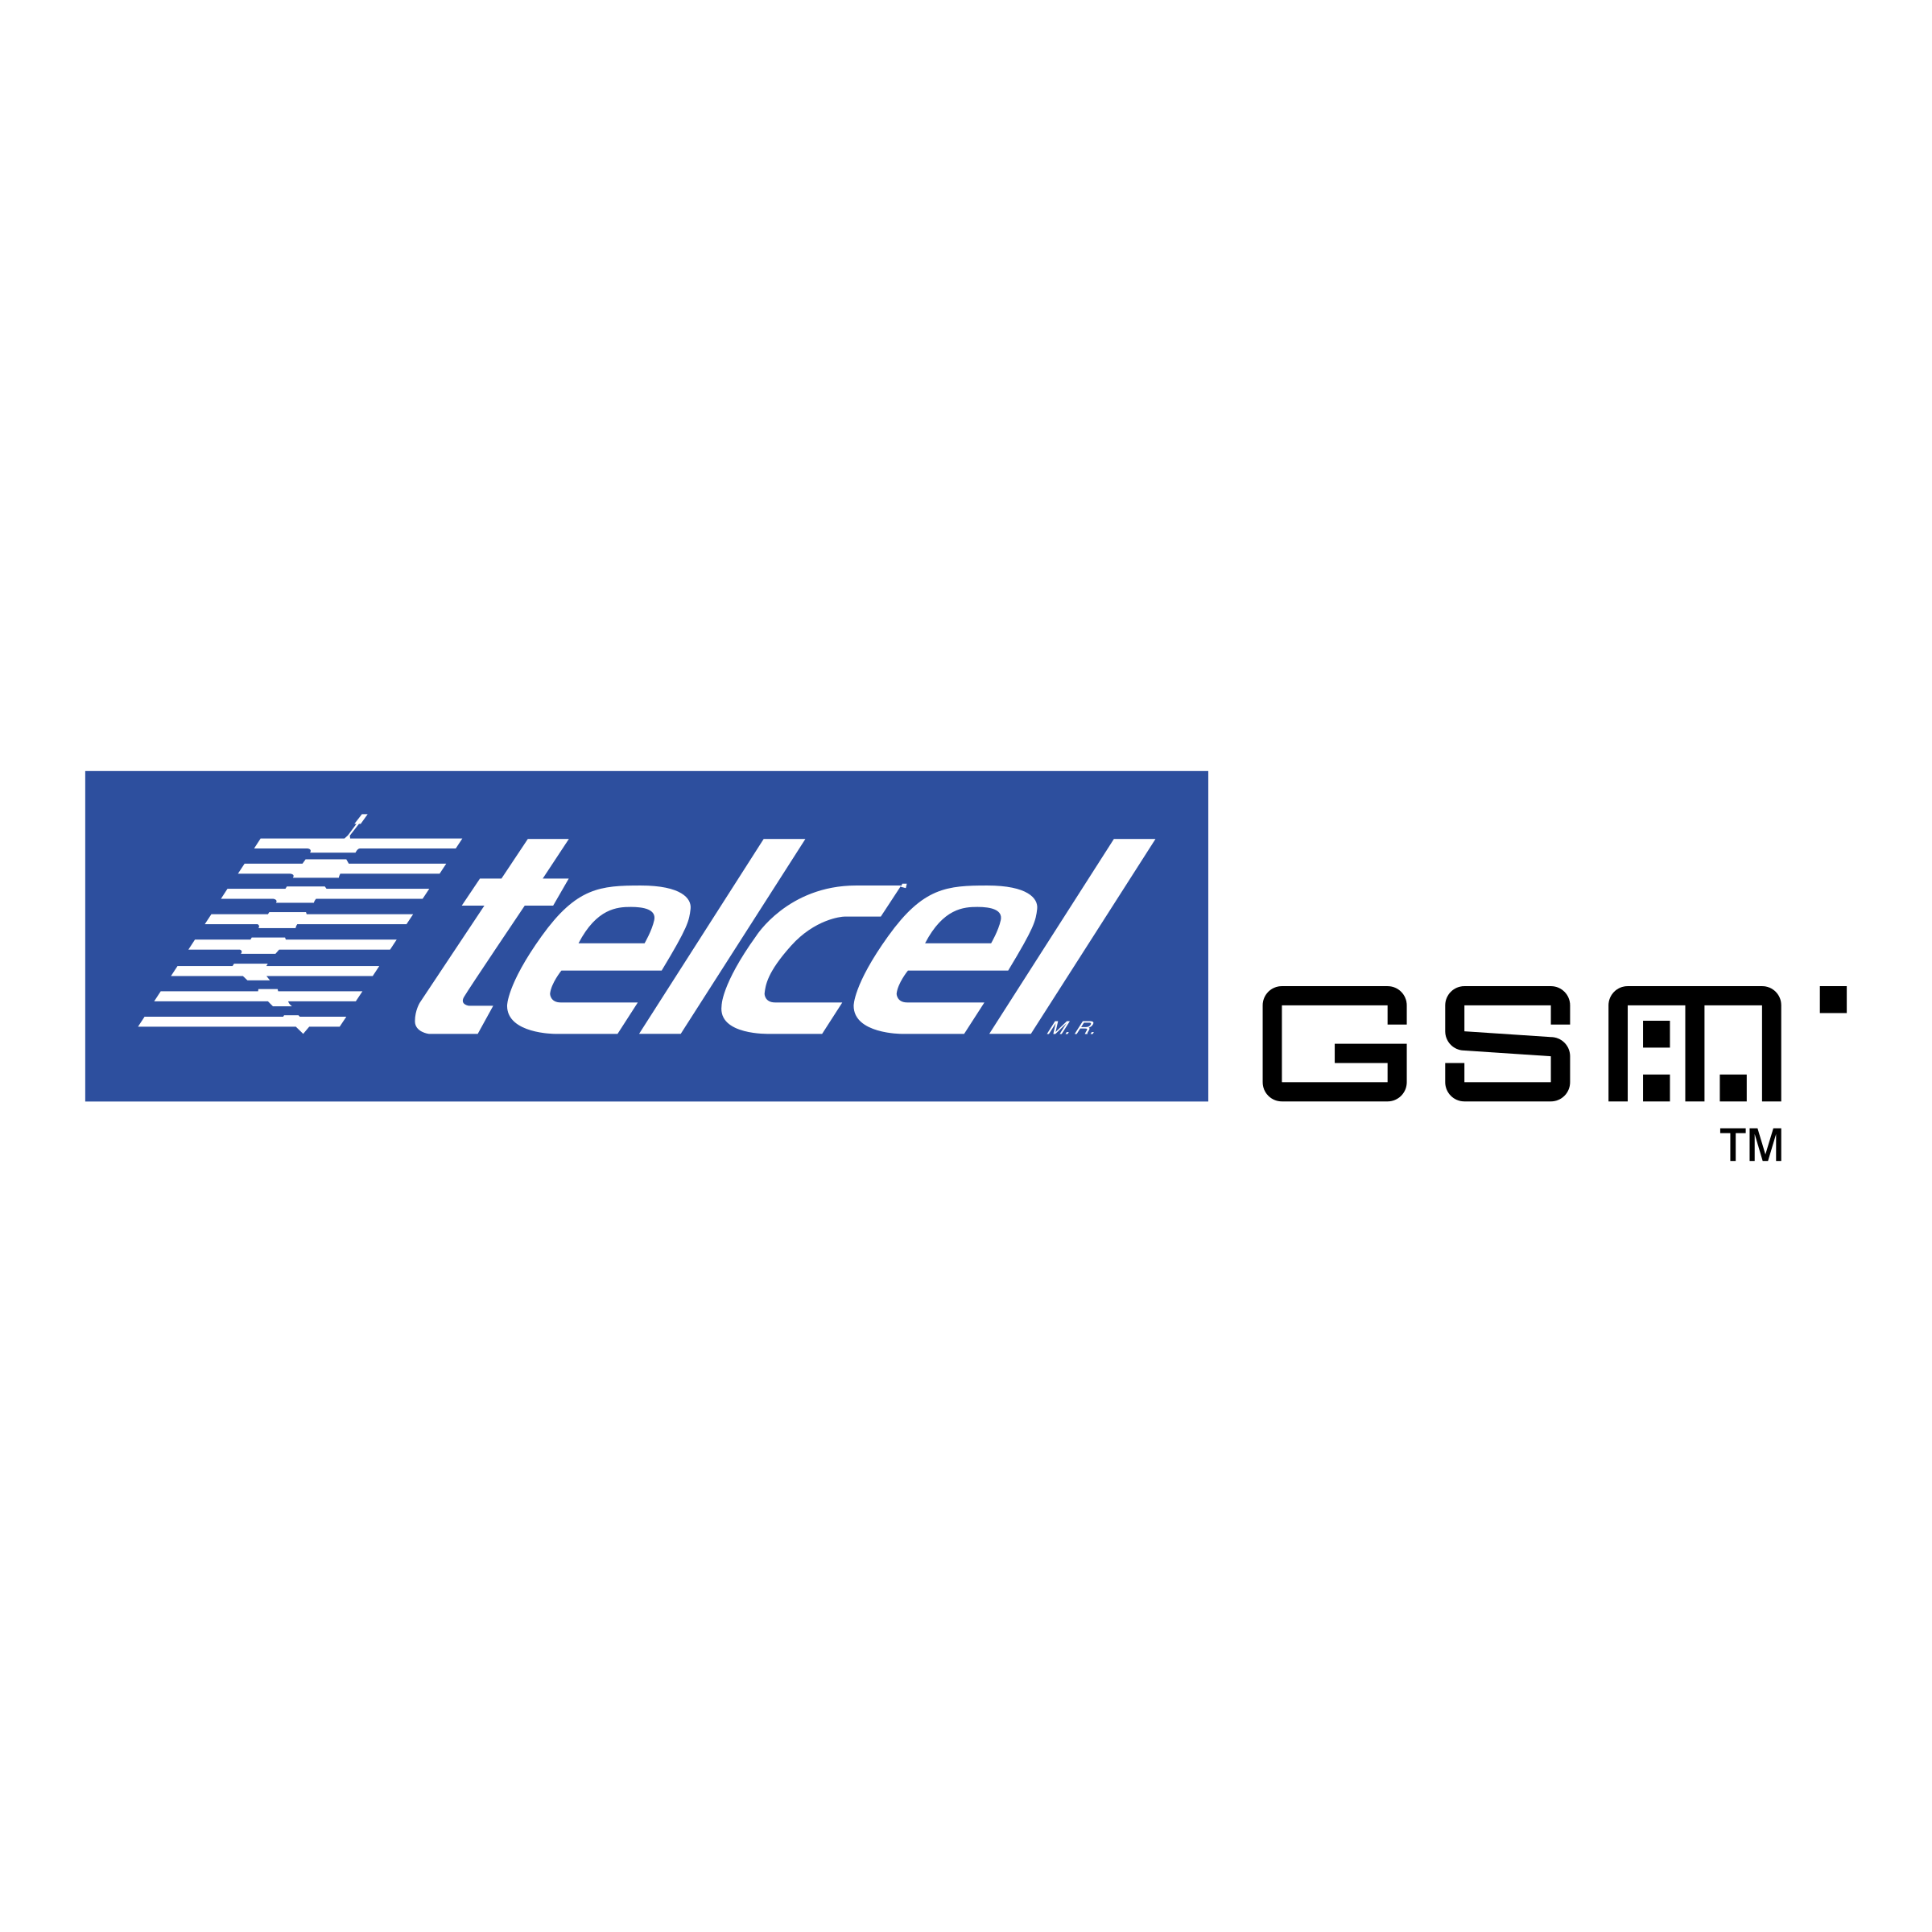 Telcel Logo - Telcel Logo PNG Transparent & SVG Vector - Freebie Supply